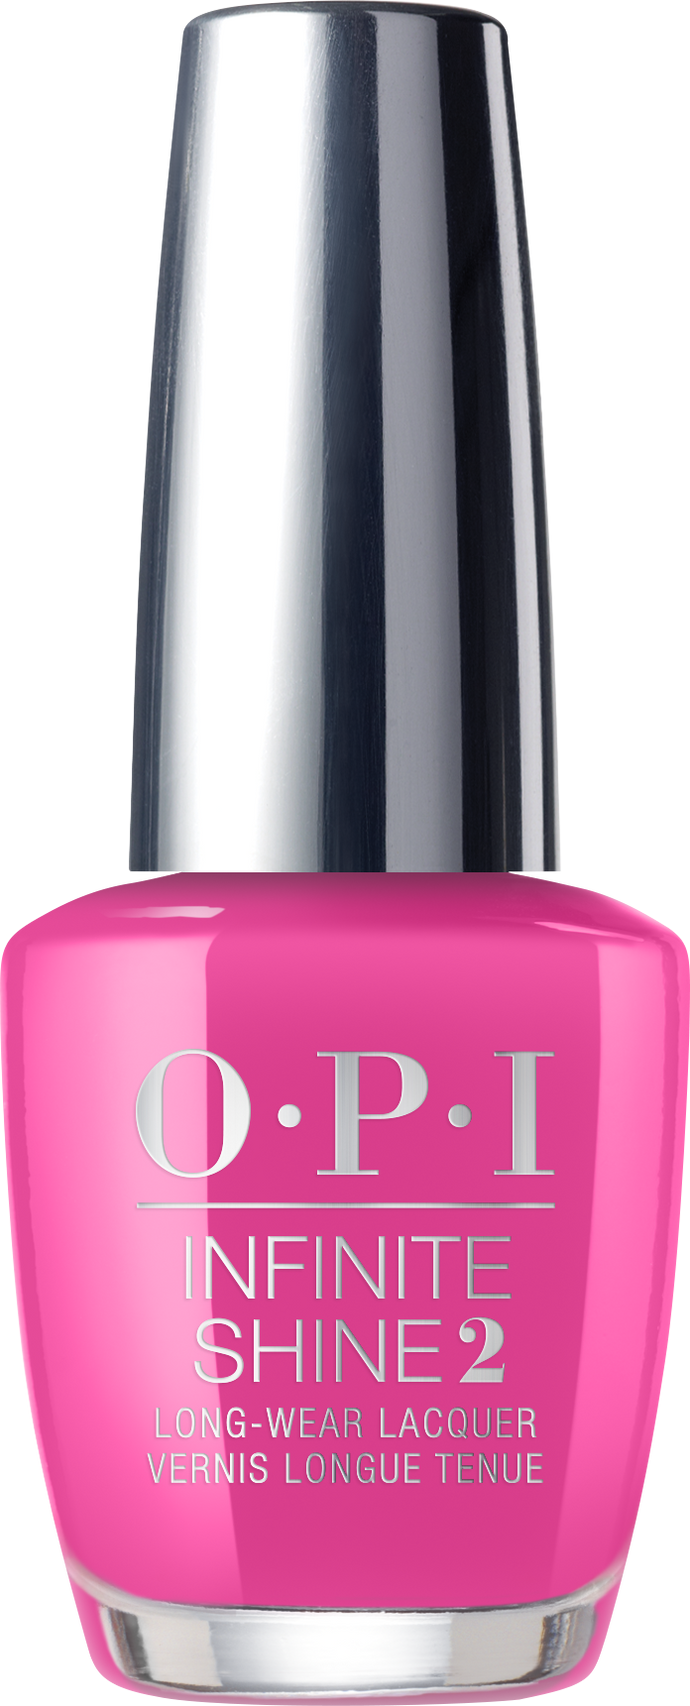 OPI OPI Infinite Shine - No Turning Back From Pink Street 0.5 oz - #ISLL19 - Sleek Nail